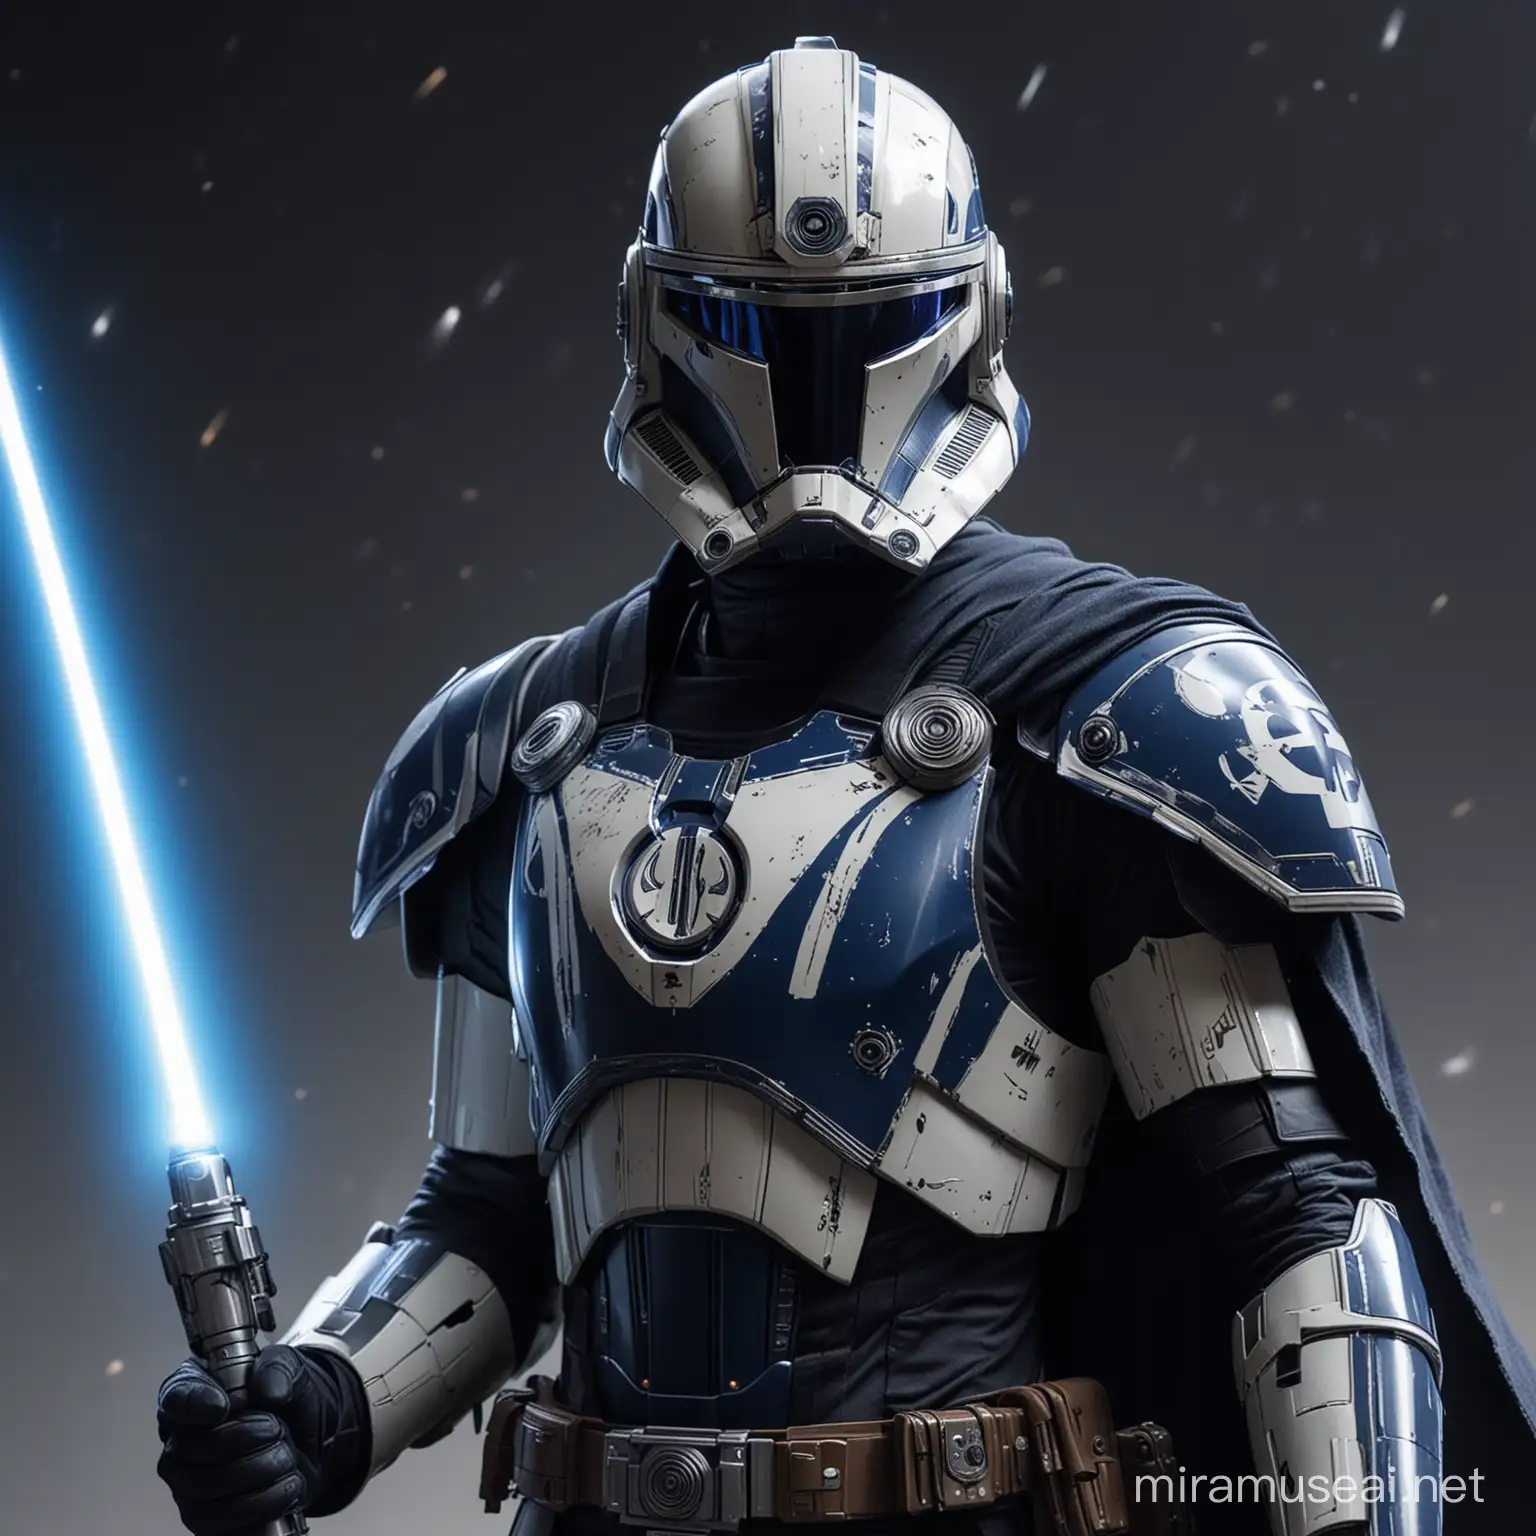 Star Wars Inspired Jedi Sentinel in Dark Blue Armor with Futuristic Detail